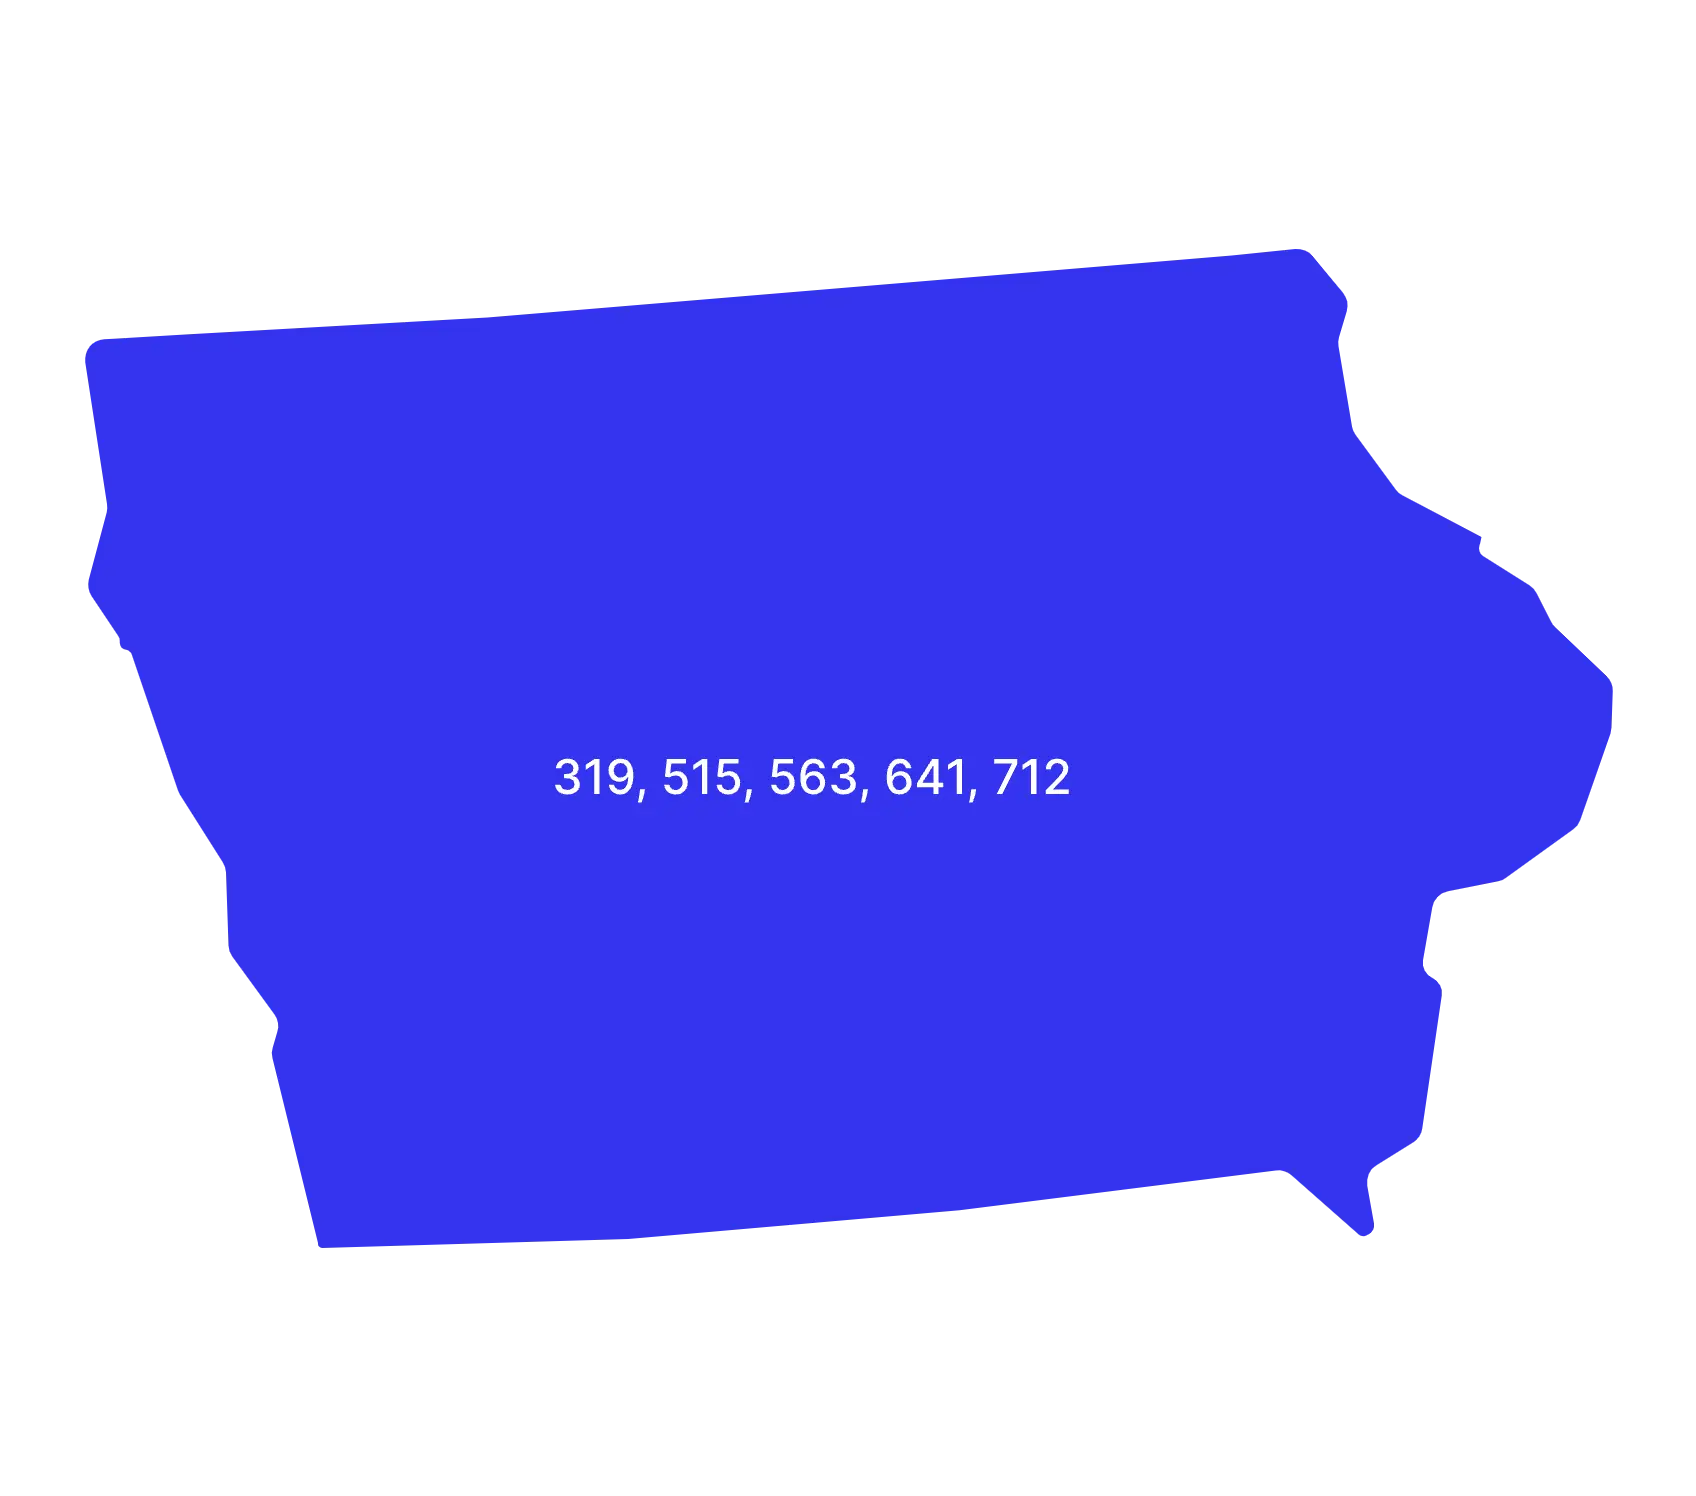 Iowa phone numbers